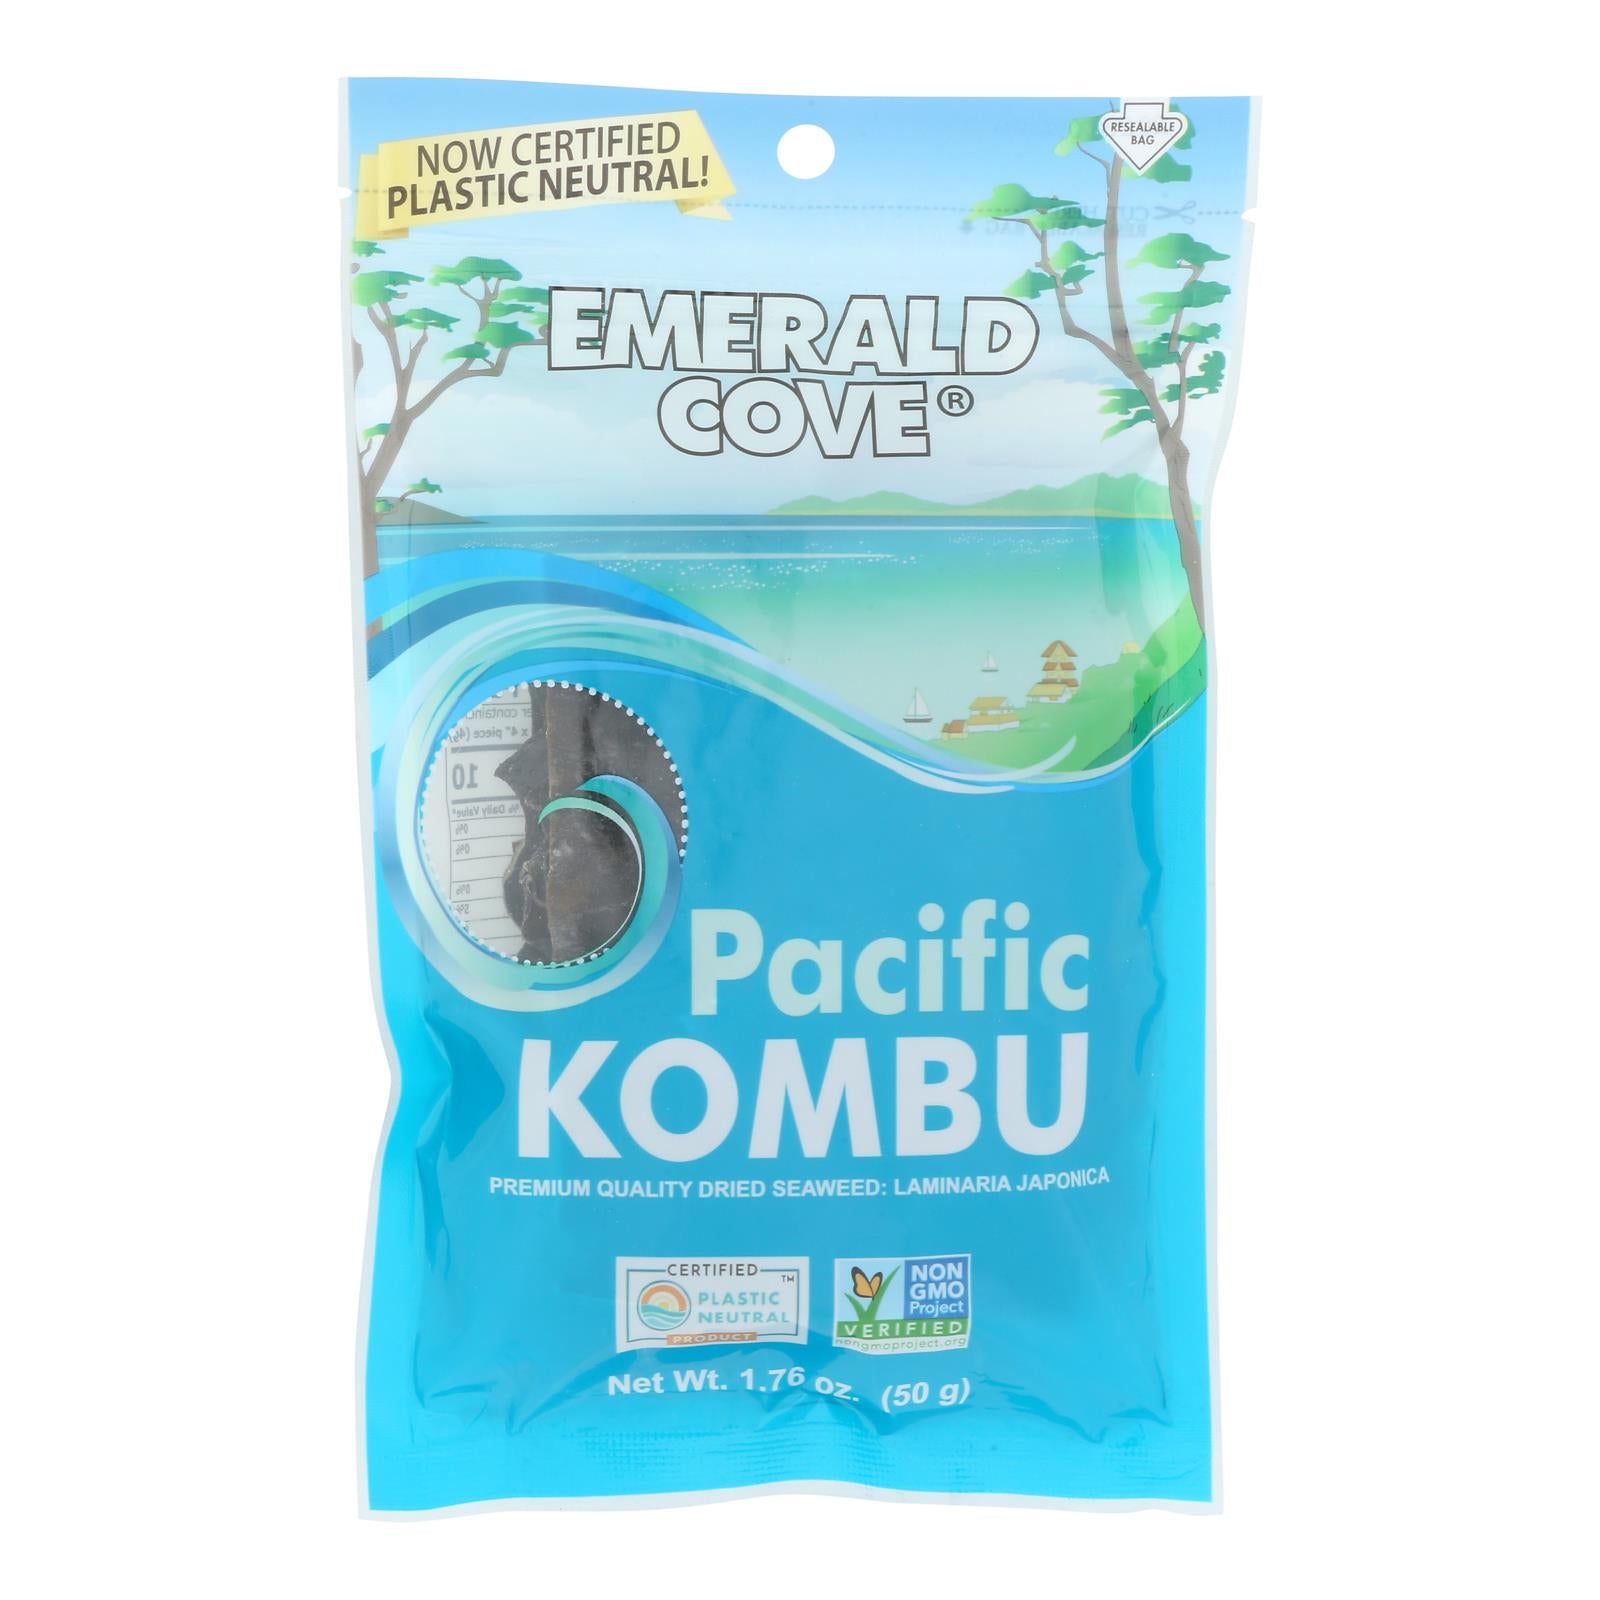 Emerald Cove Sea Vegetables - Pacific Kombu - Silver Grade - 1.76 Oz - Case Of 6